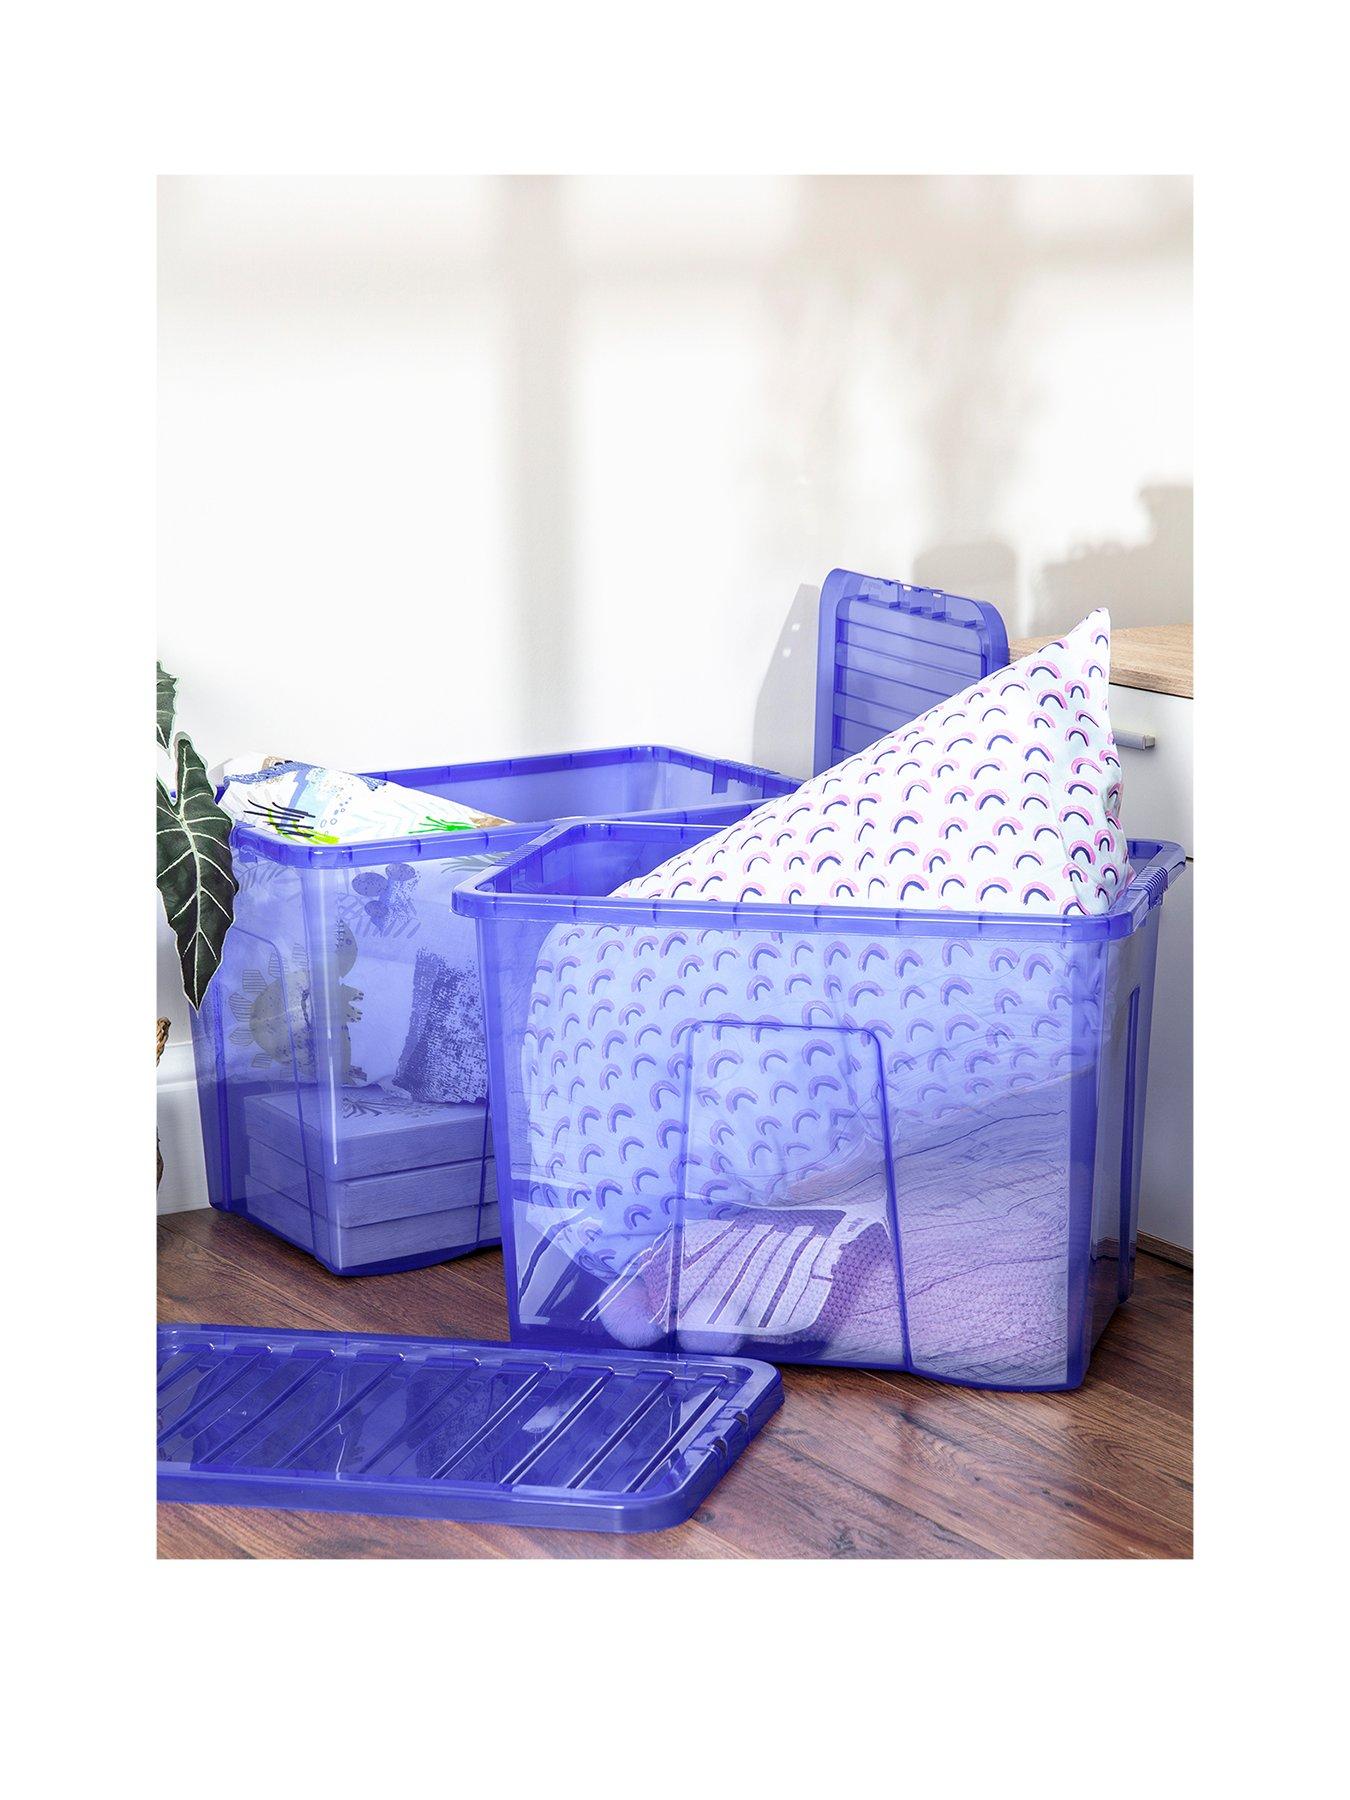 Details about   Wham Studio Plastic Storage Basket Home Kitchen Office Organiser Storage Boxes 